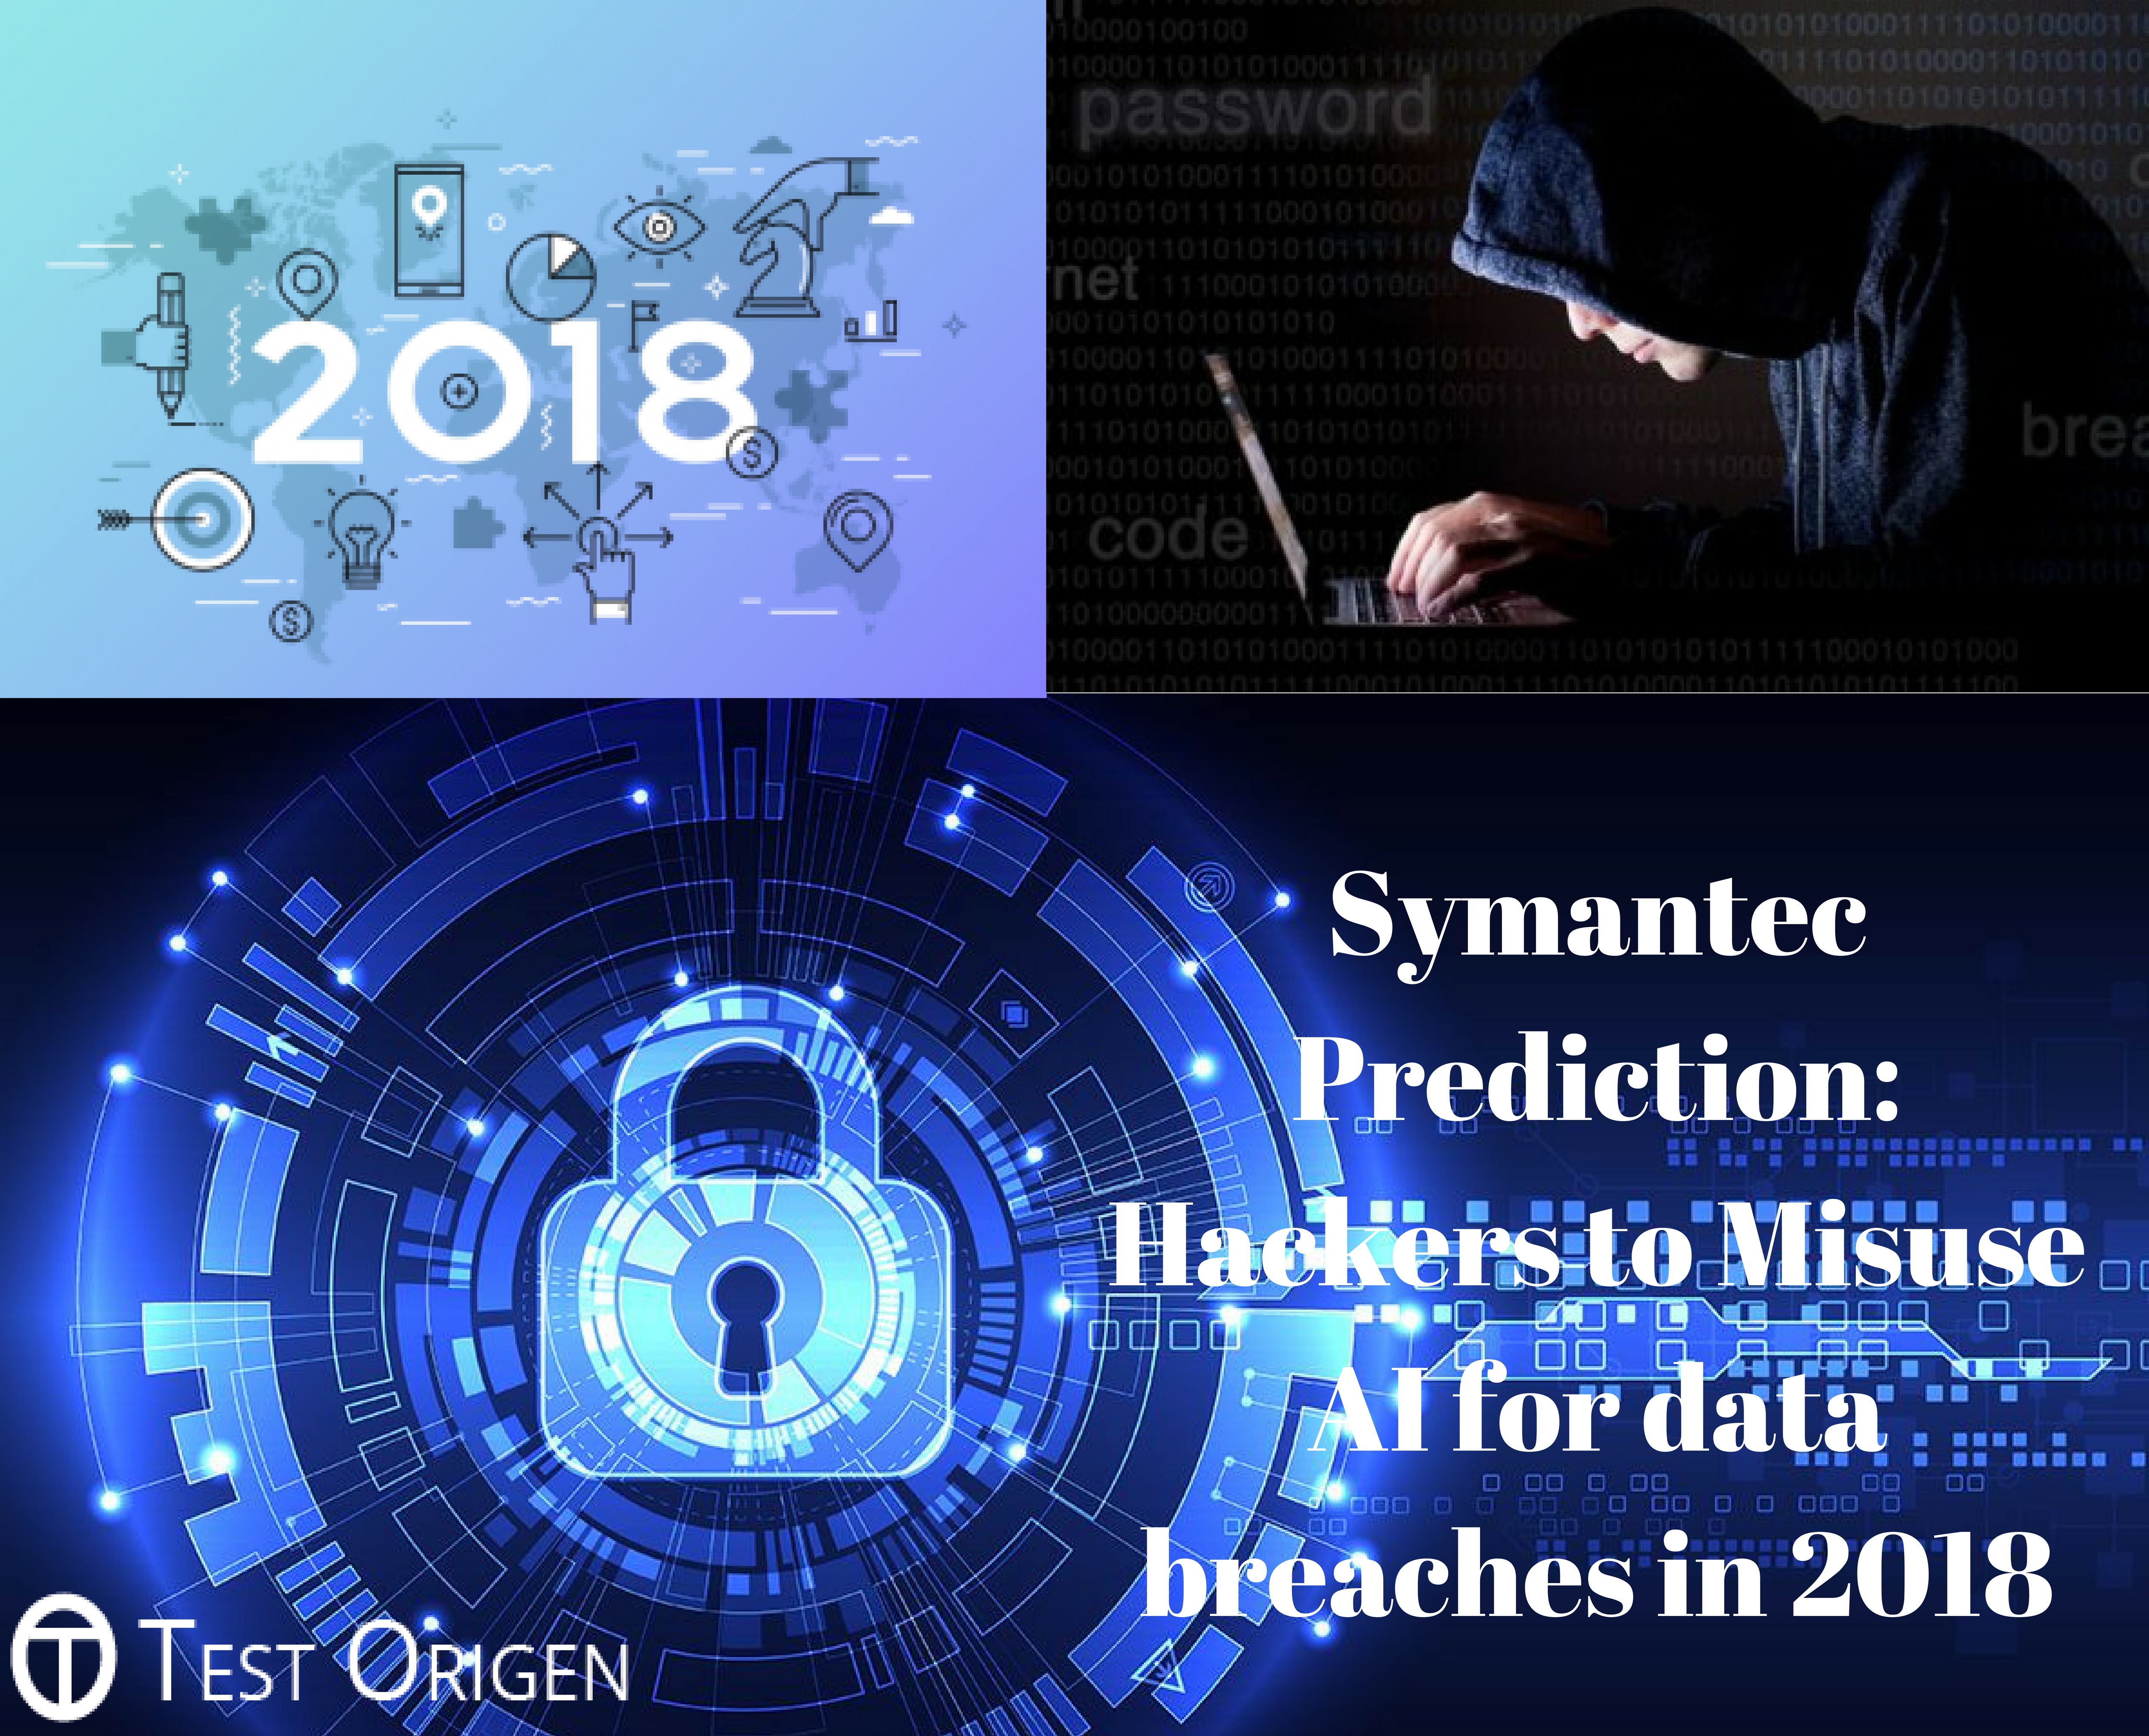 Symantec Prediction: Hackers to Misuse AI for data breaches in 2018